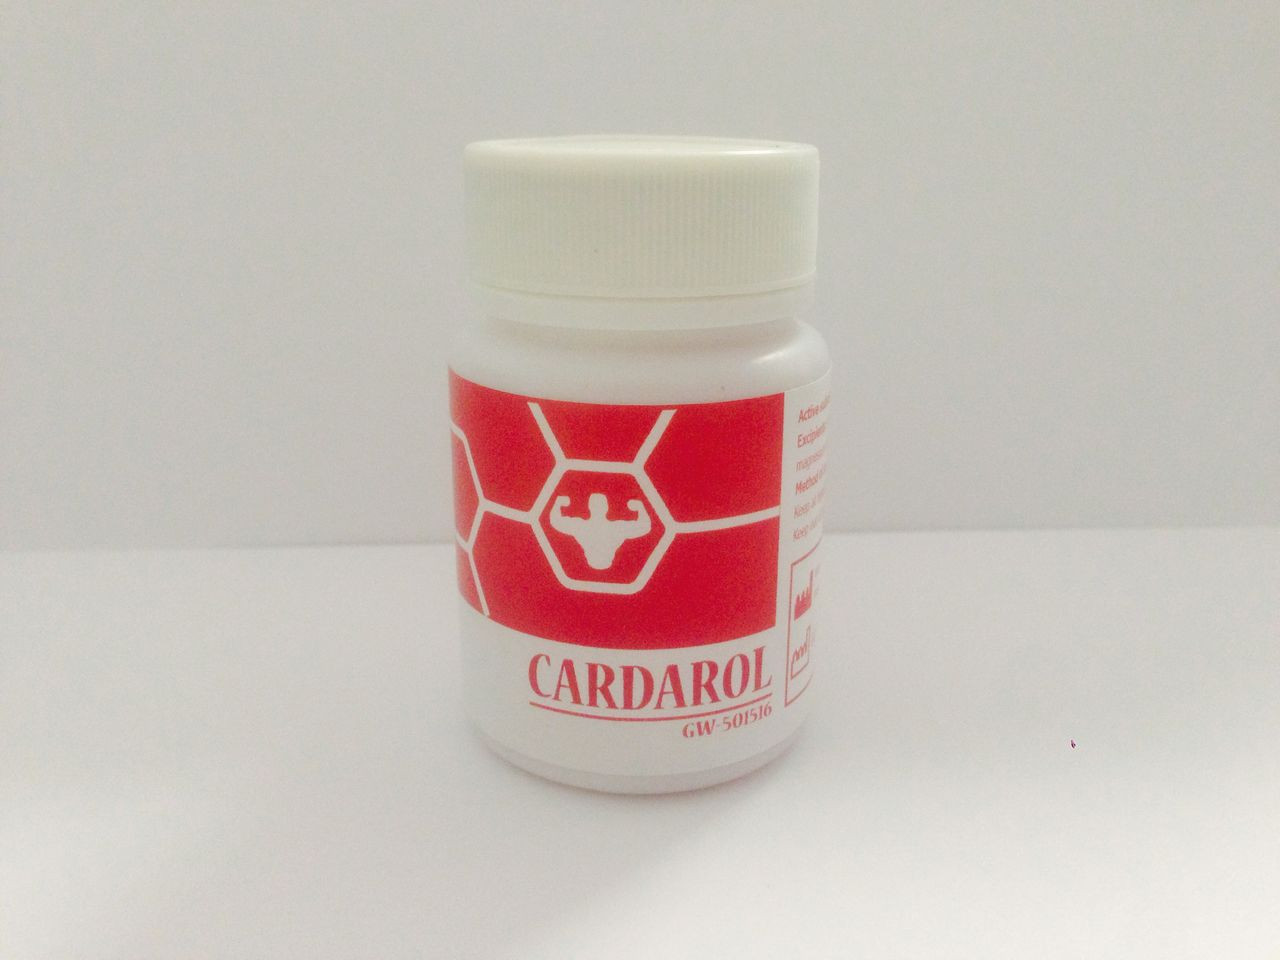 Cardarol (GW501516)